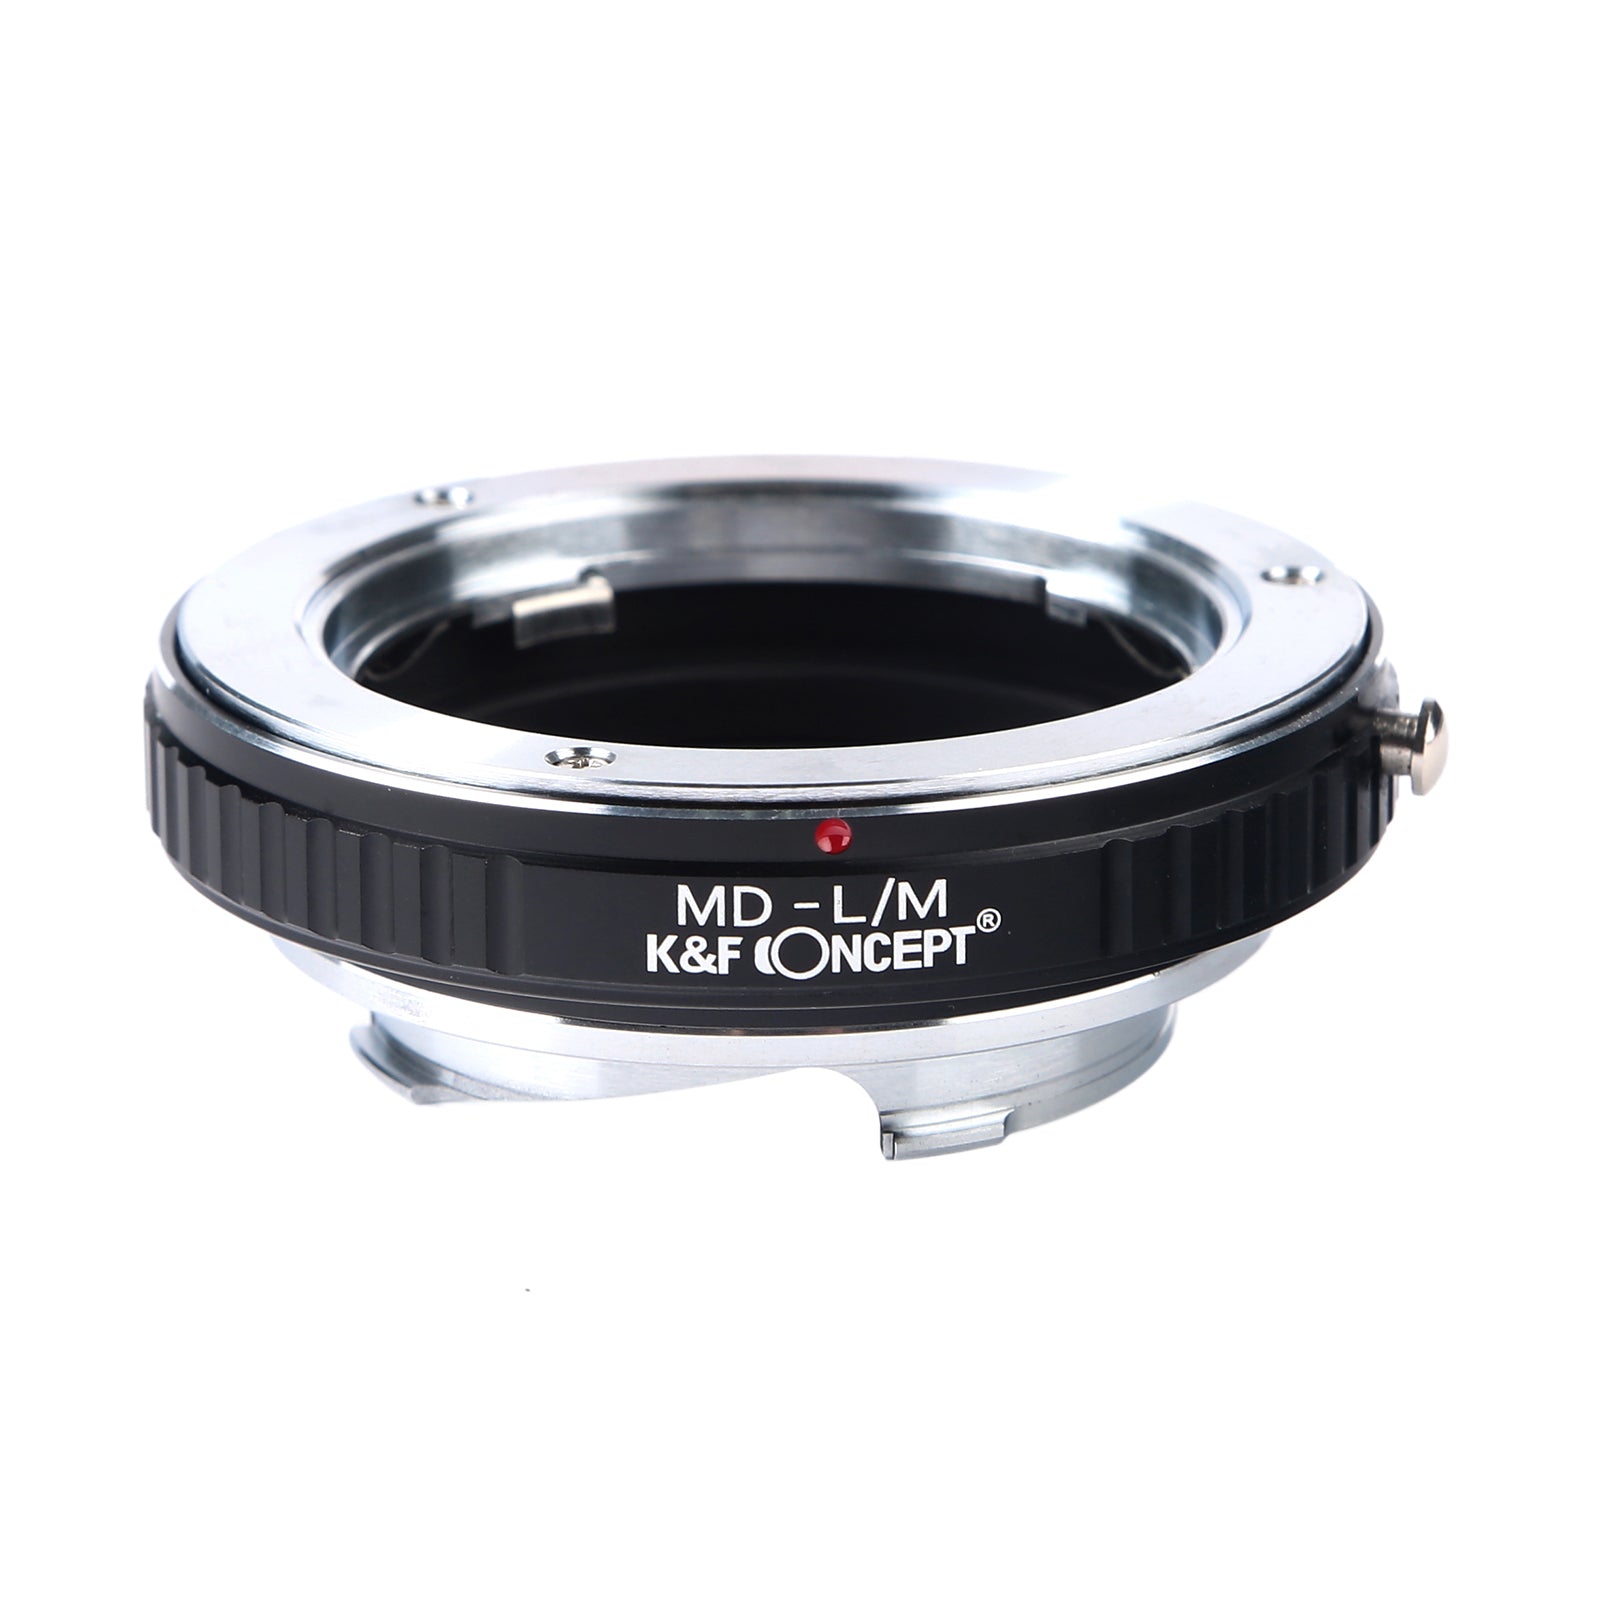 K&F CONCEPT Minolta MD-LM Leica M Lens mount adapter